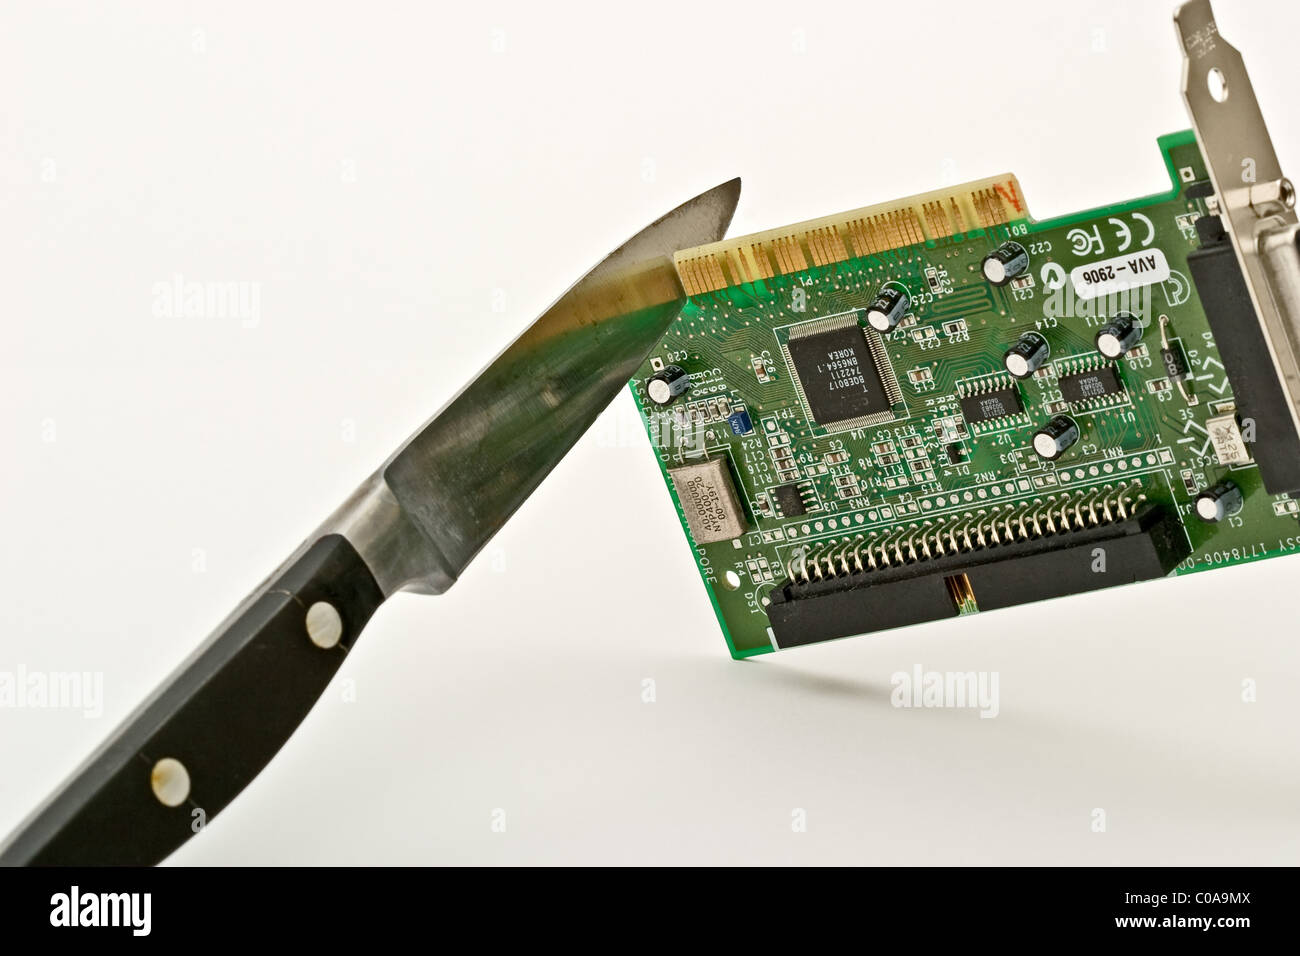 Sharp knife cutting into a circuit board Stock Photo